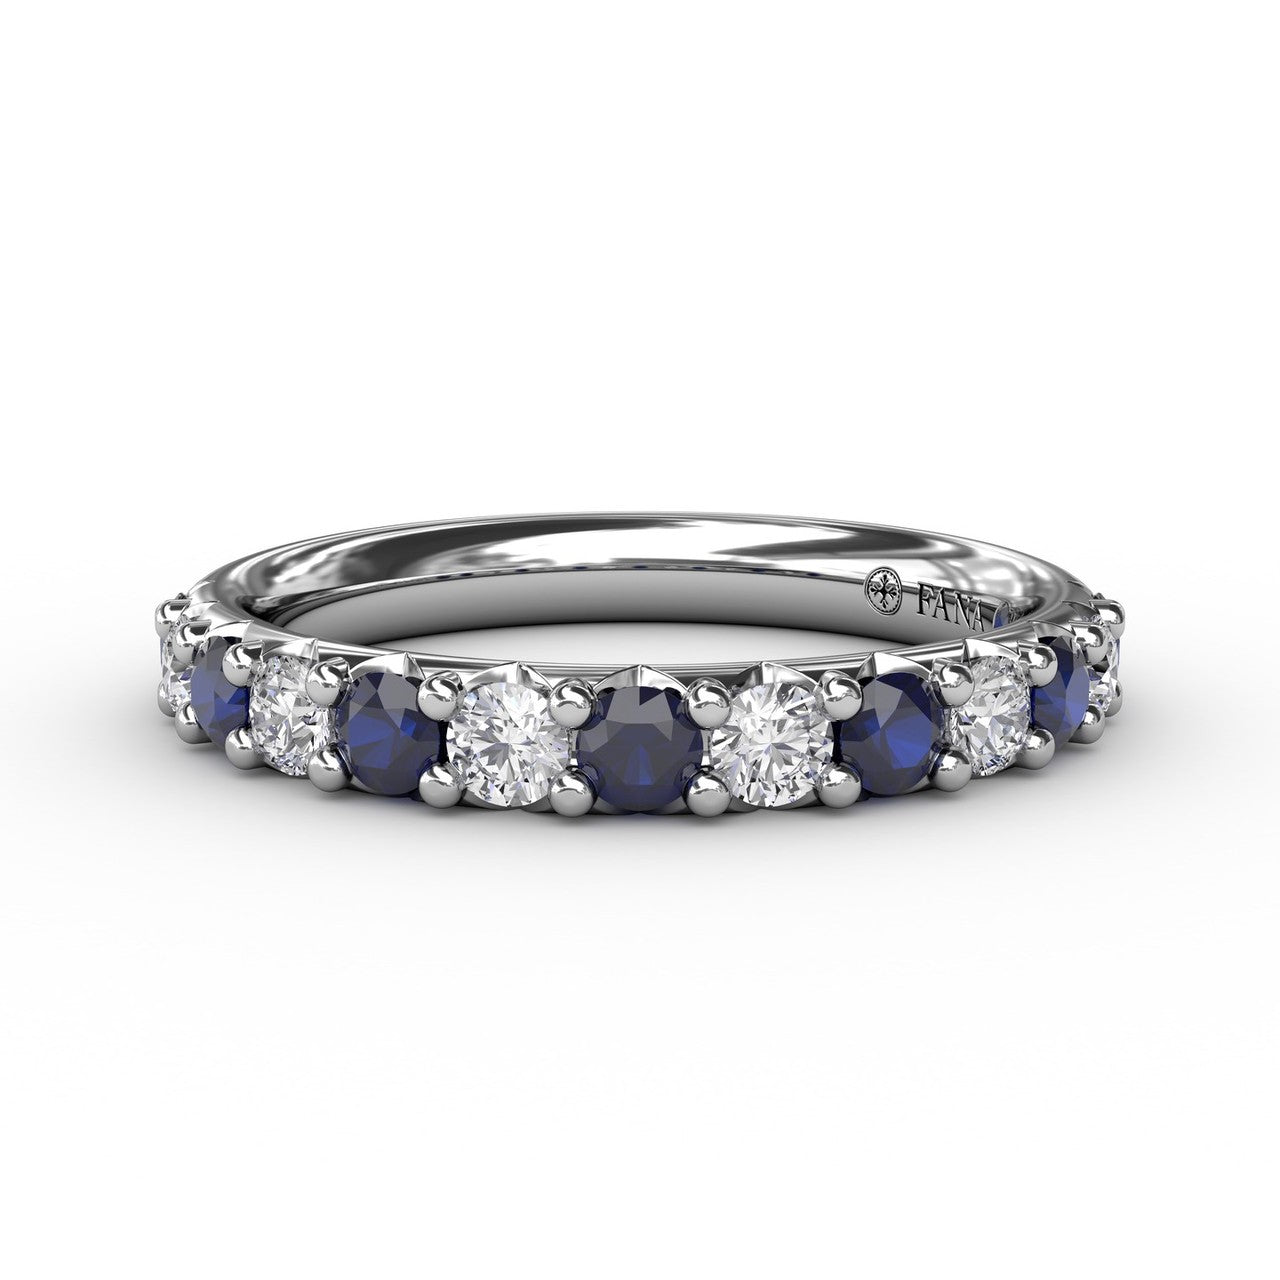 14k White Gold Sapphire And Diamond Ring - Fana